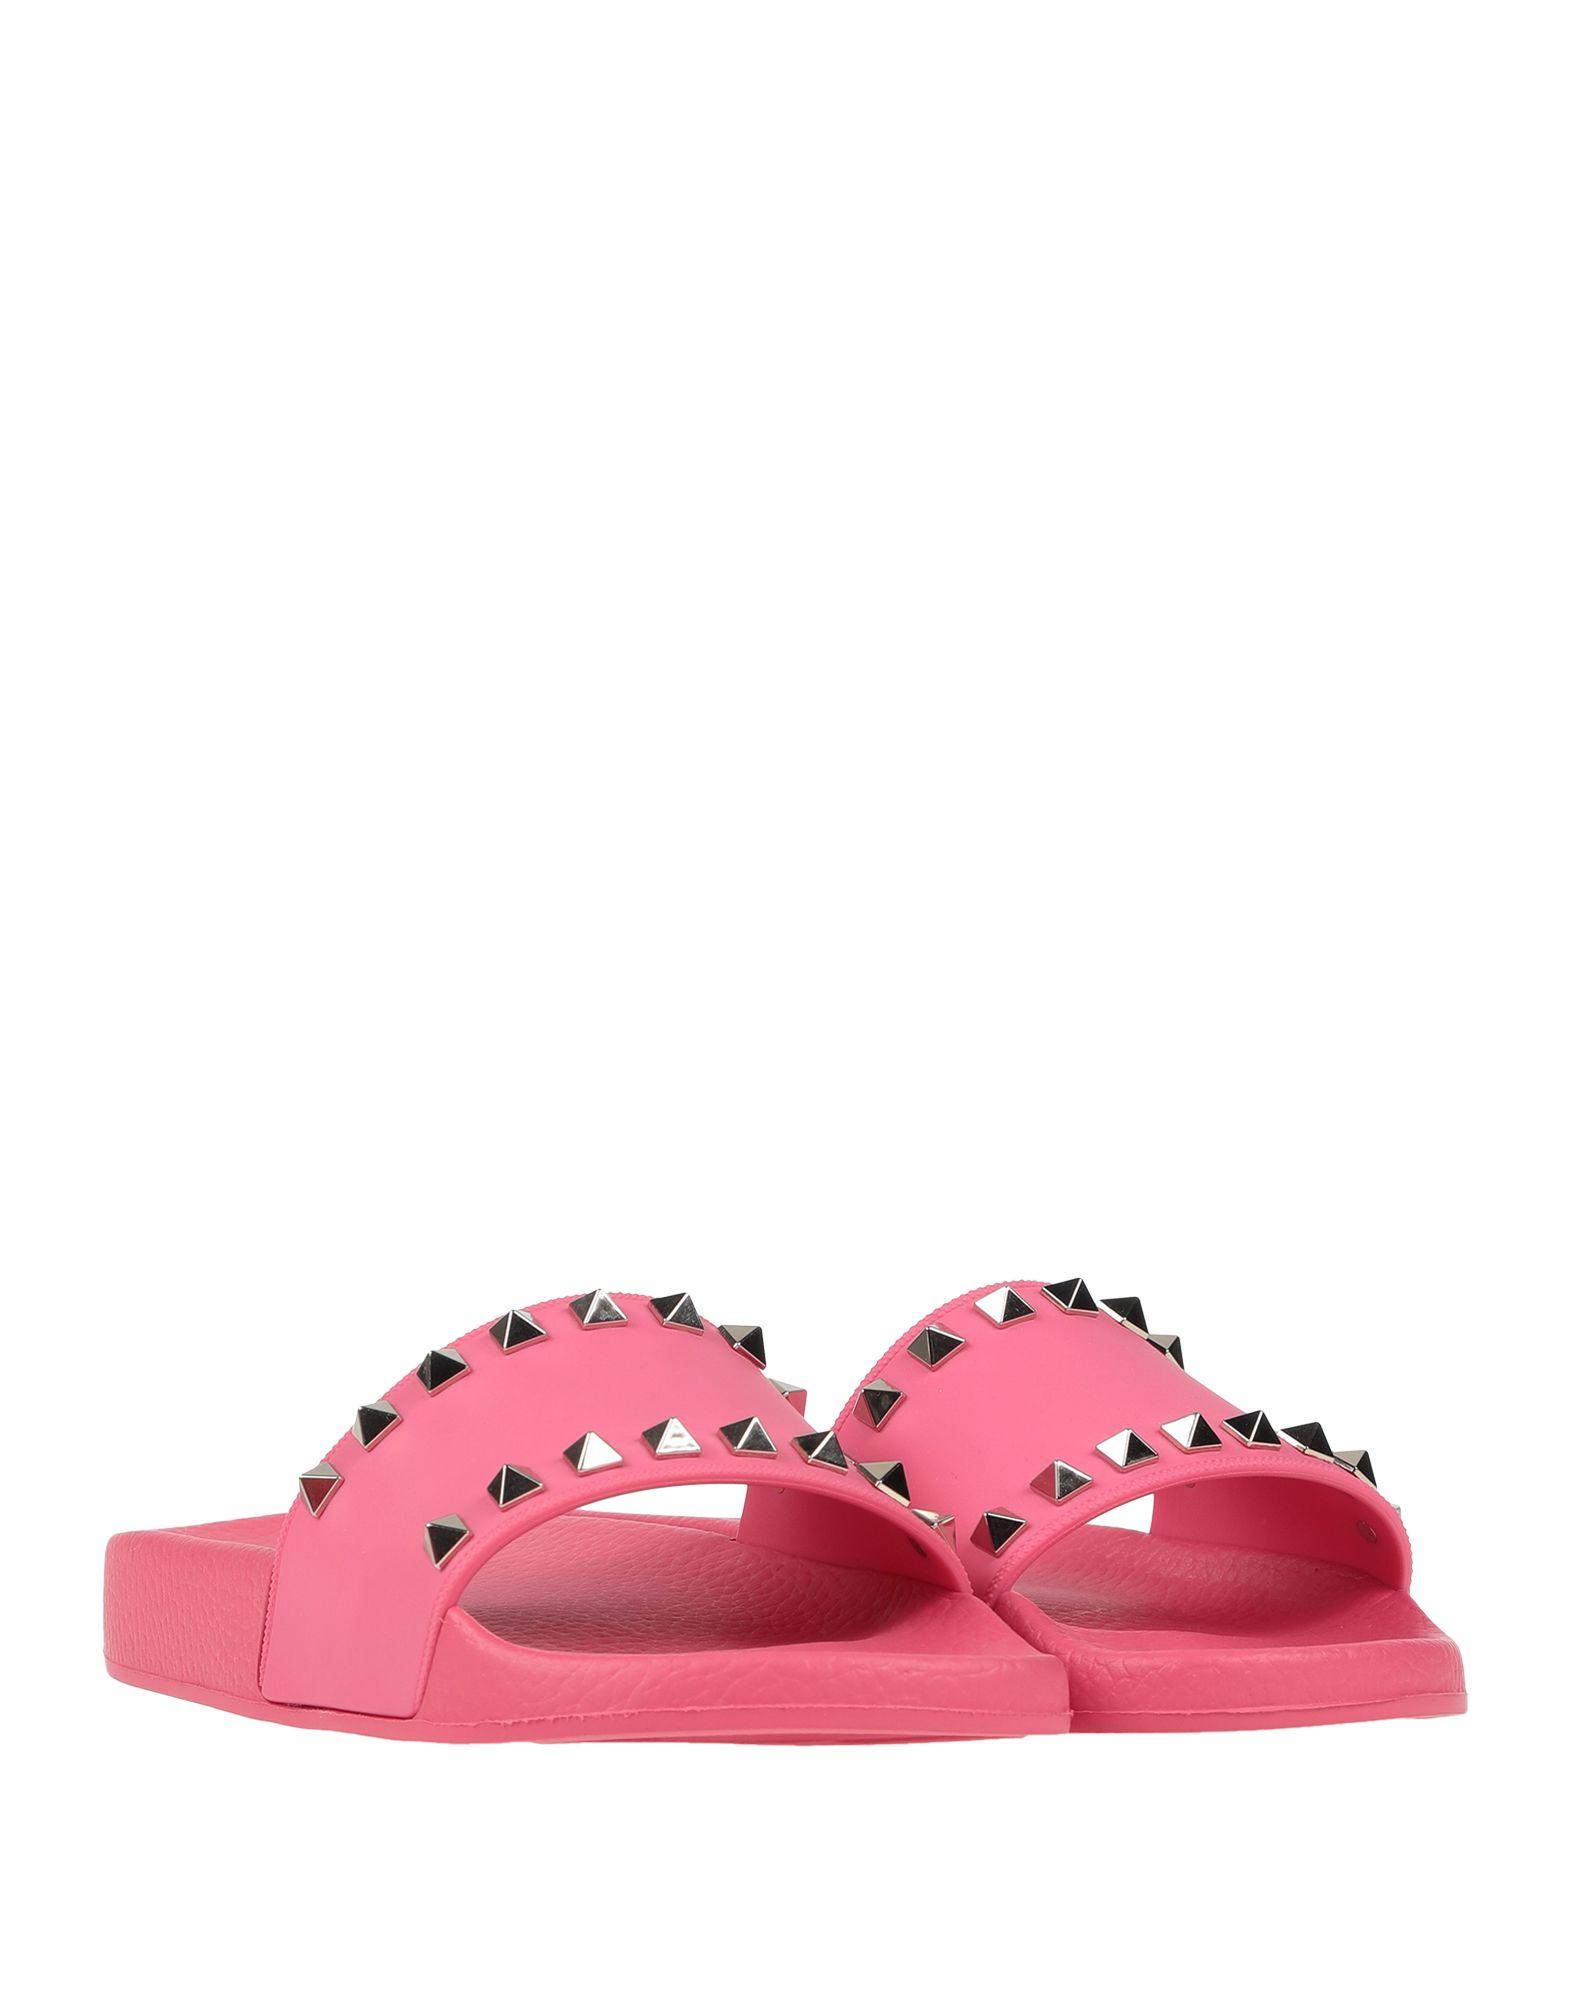 Valentino Rubber Sandals in Fuchsia (Pink) - Lyst